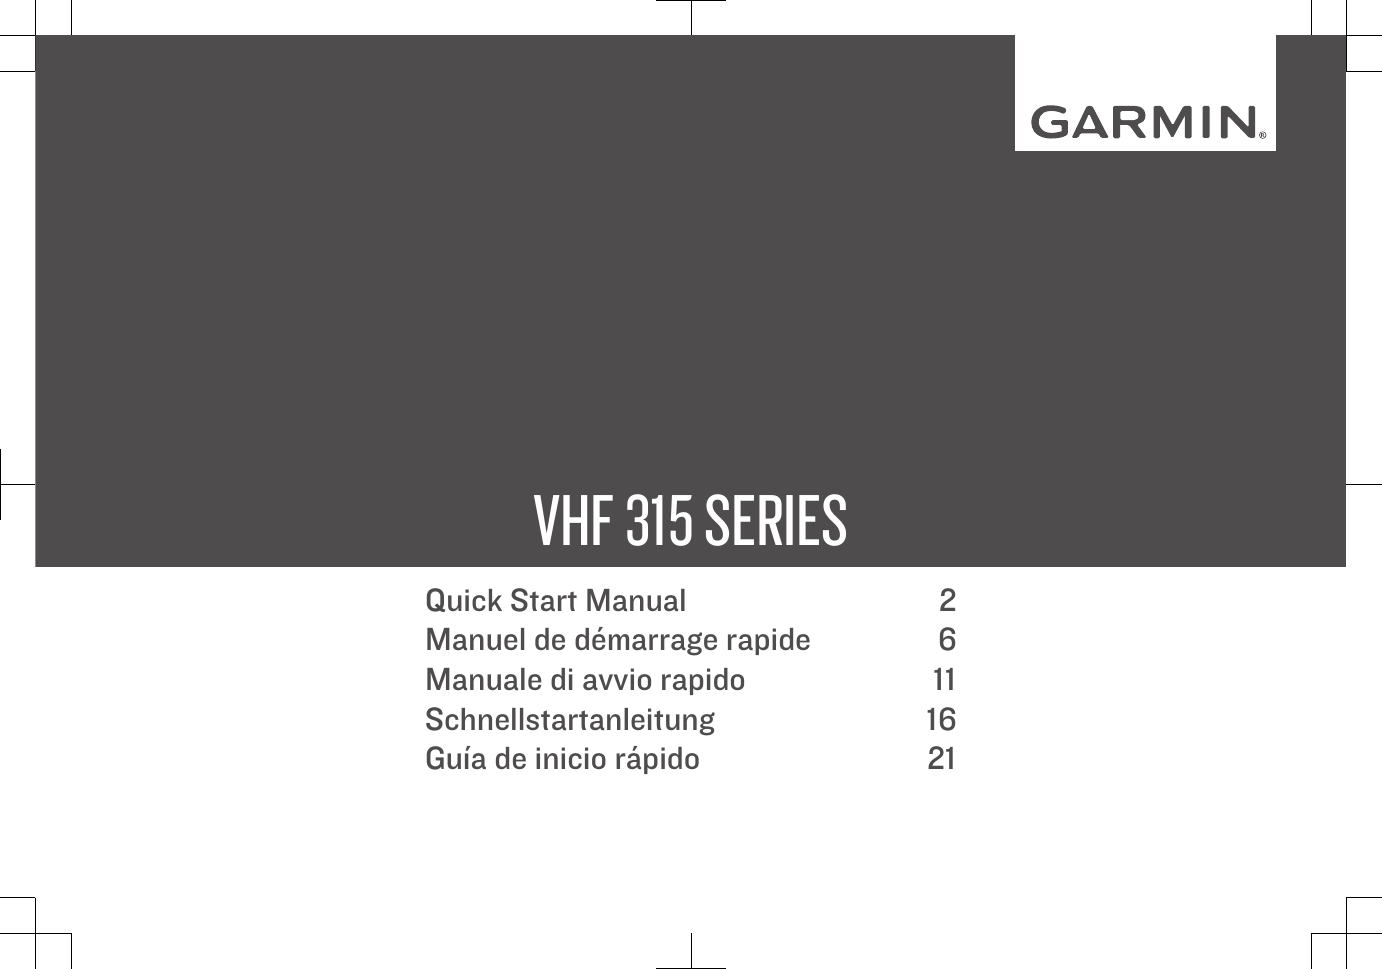 VHF 315 SERIESQuick Start Manual 2Manuel de démarrage rapide 6Manuale di avvio rapido 11Schnellstartanleitung 16Guía de inicio rápido 21